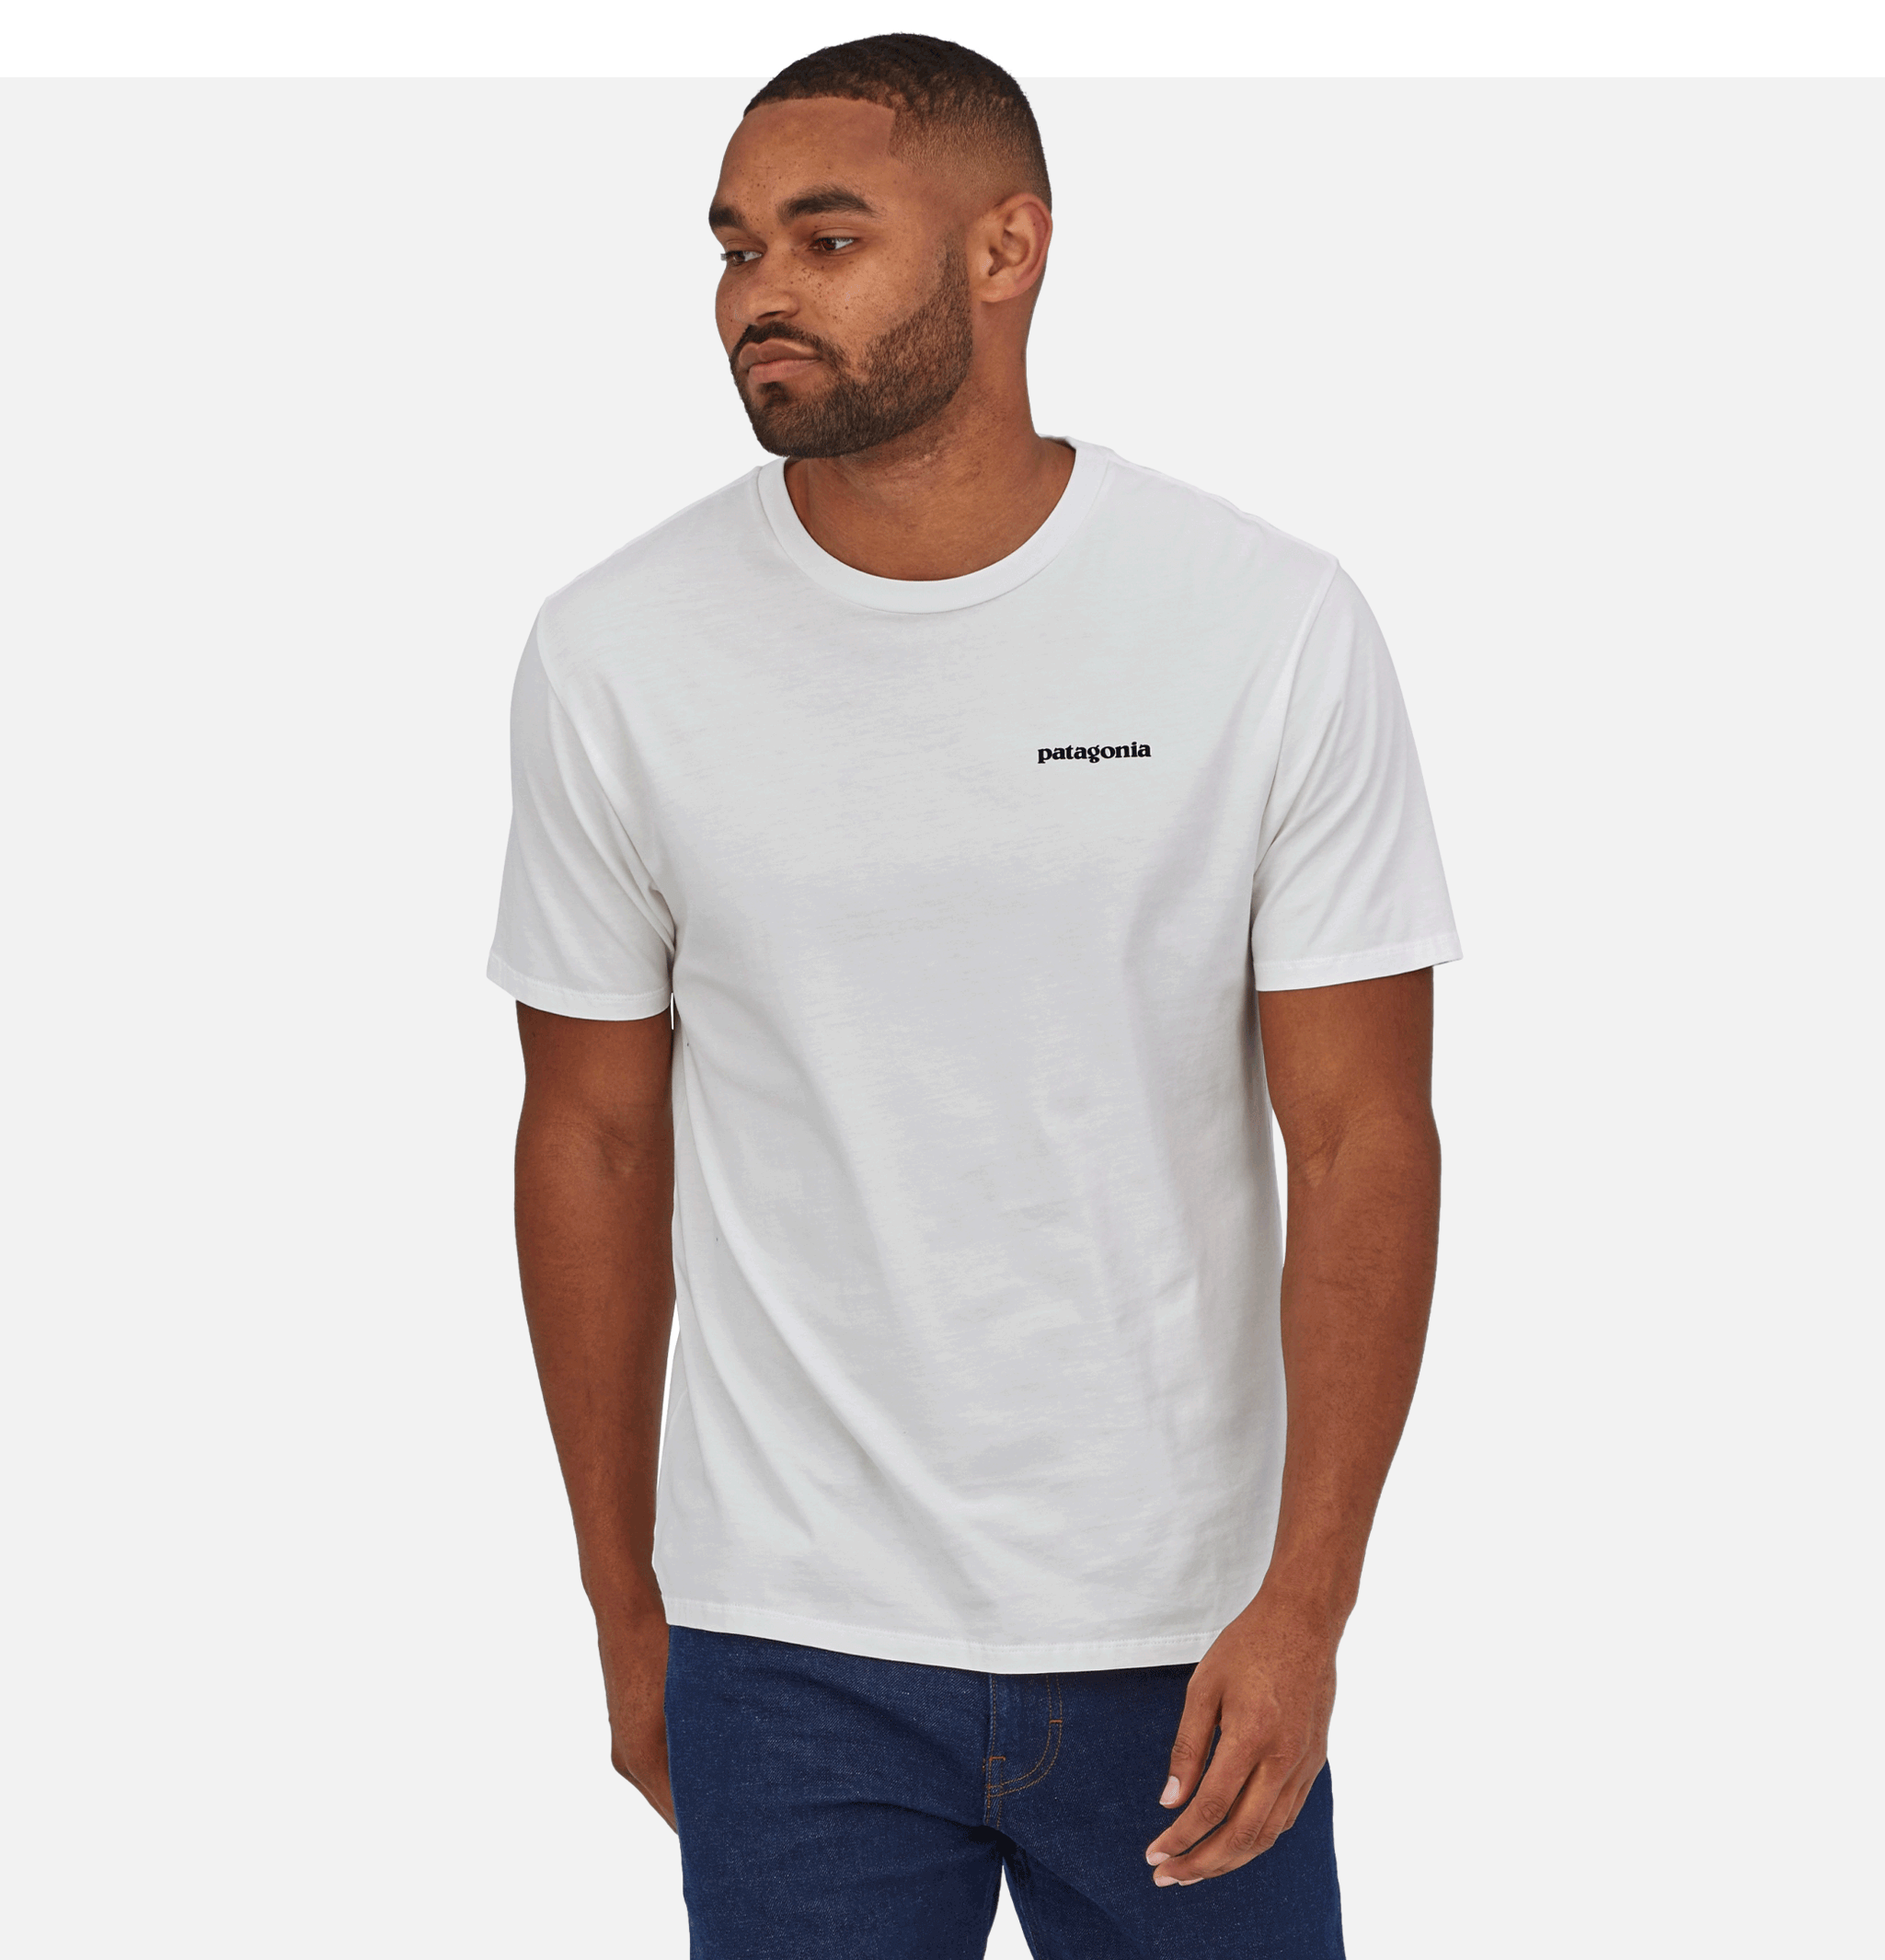 P6 Mission T-shirt White - Royalcheese